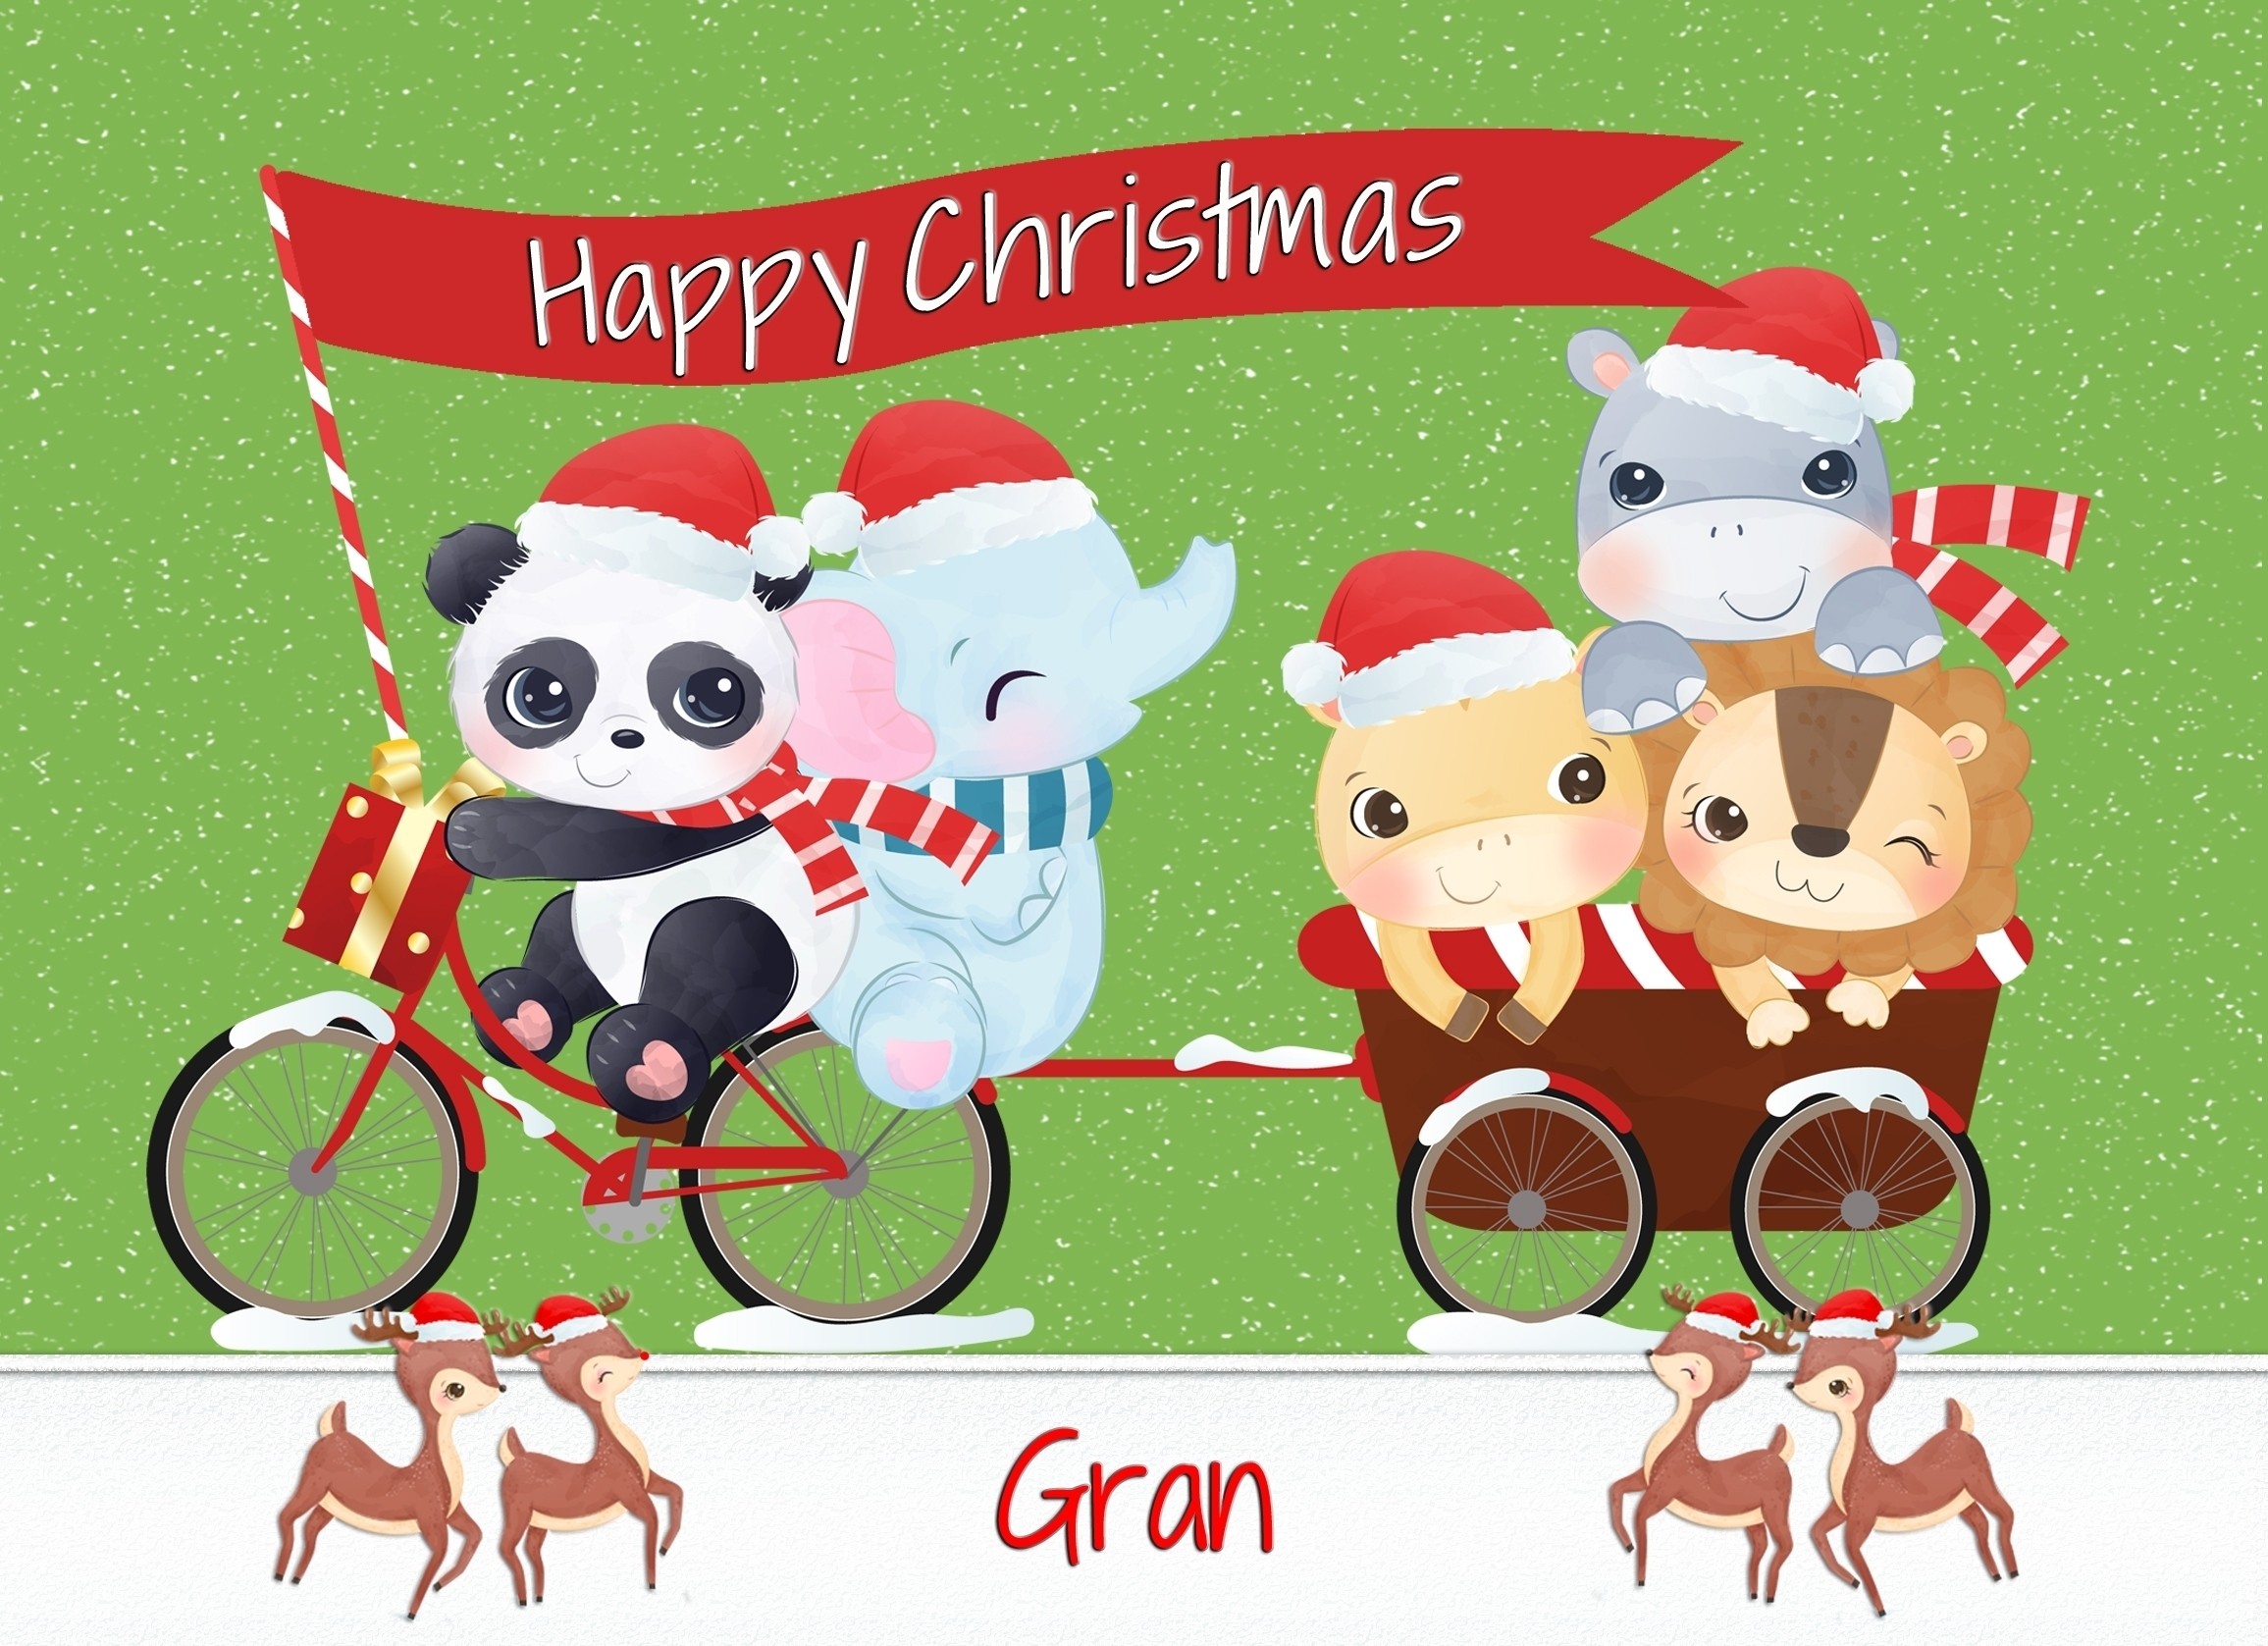 Christmas Card For Gran (Green Animals)